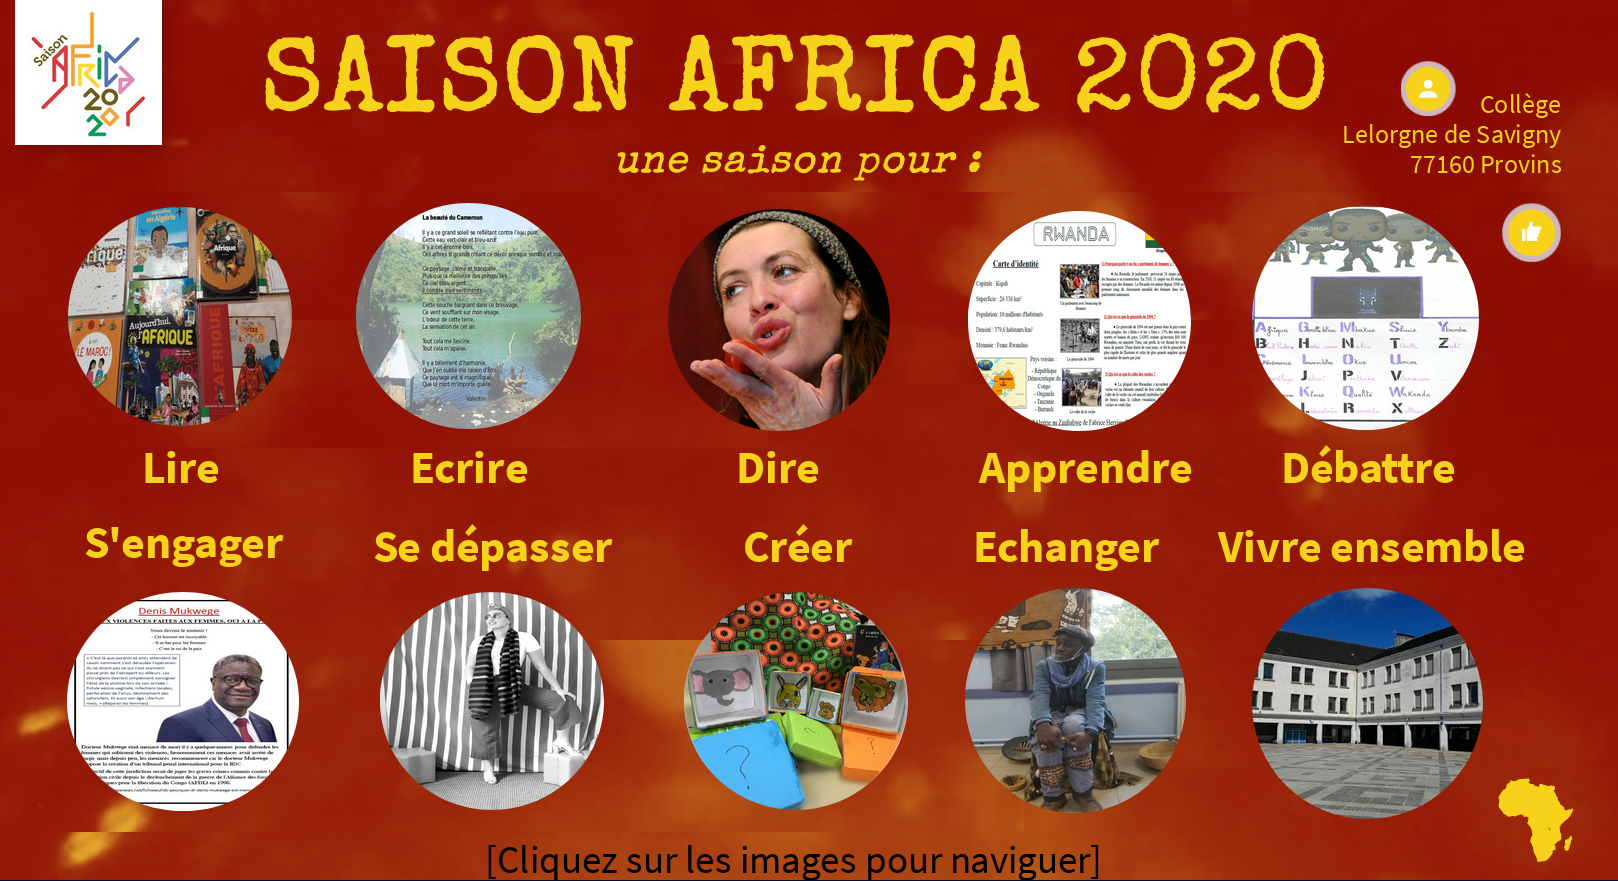 Saison Africa au Collège Lelogne de Savigny